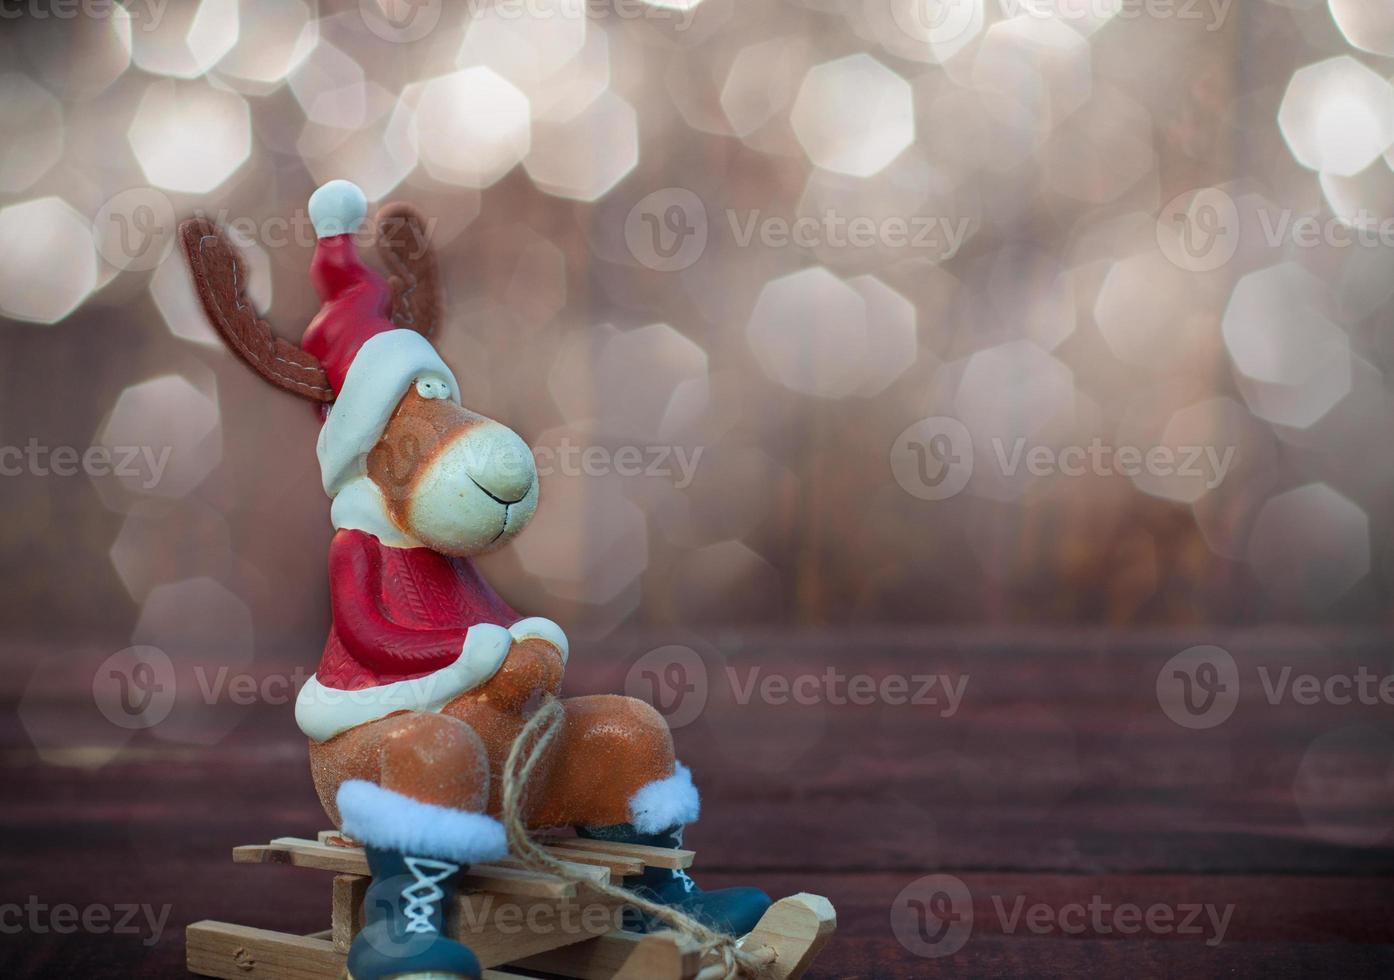 jul leksak rådjur i formell klädsel Sammanträde på en släde foto